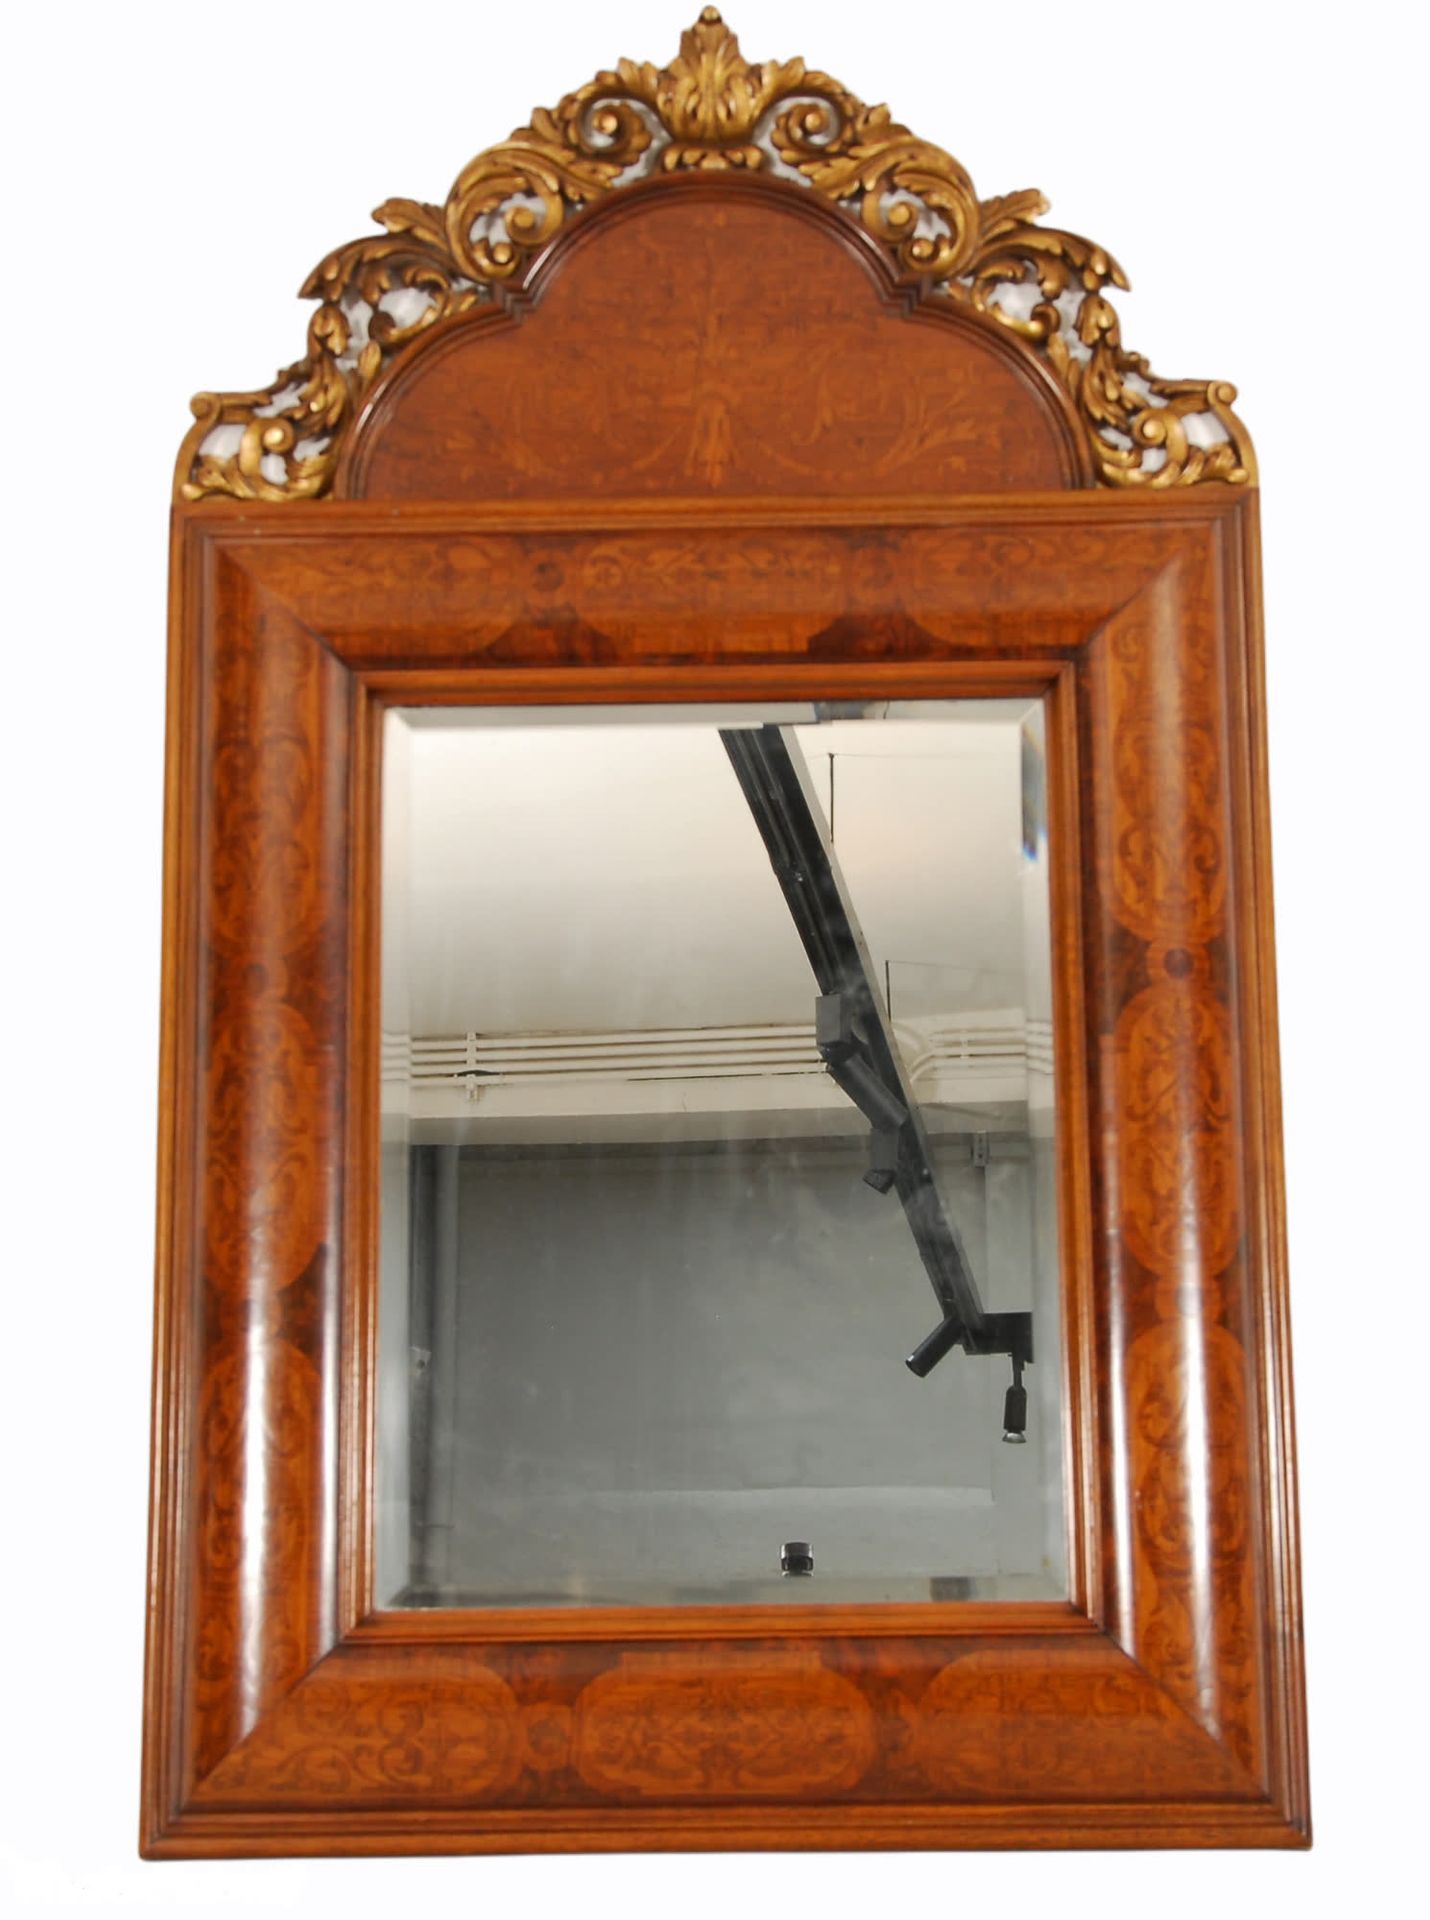 Null 
镜子



框架上镶嵌着树叶，顶部是带刺叶的镀金木座。




英国作品，18-19世纪。



114 x 68厘米。